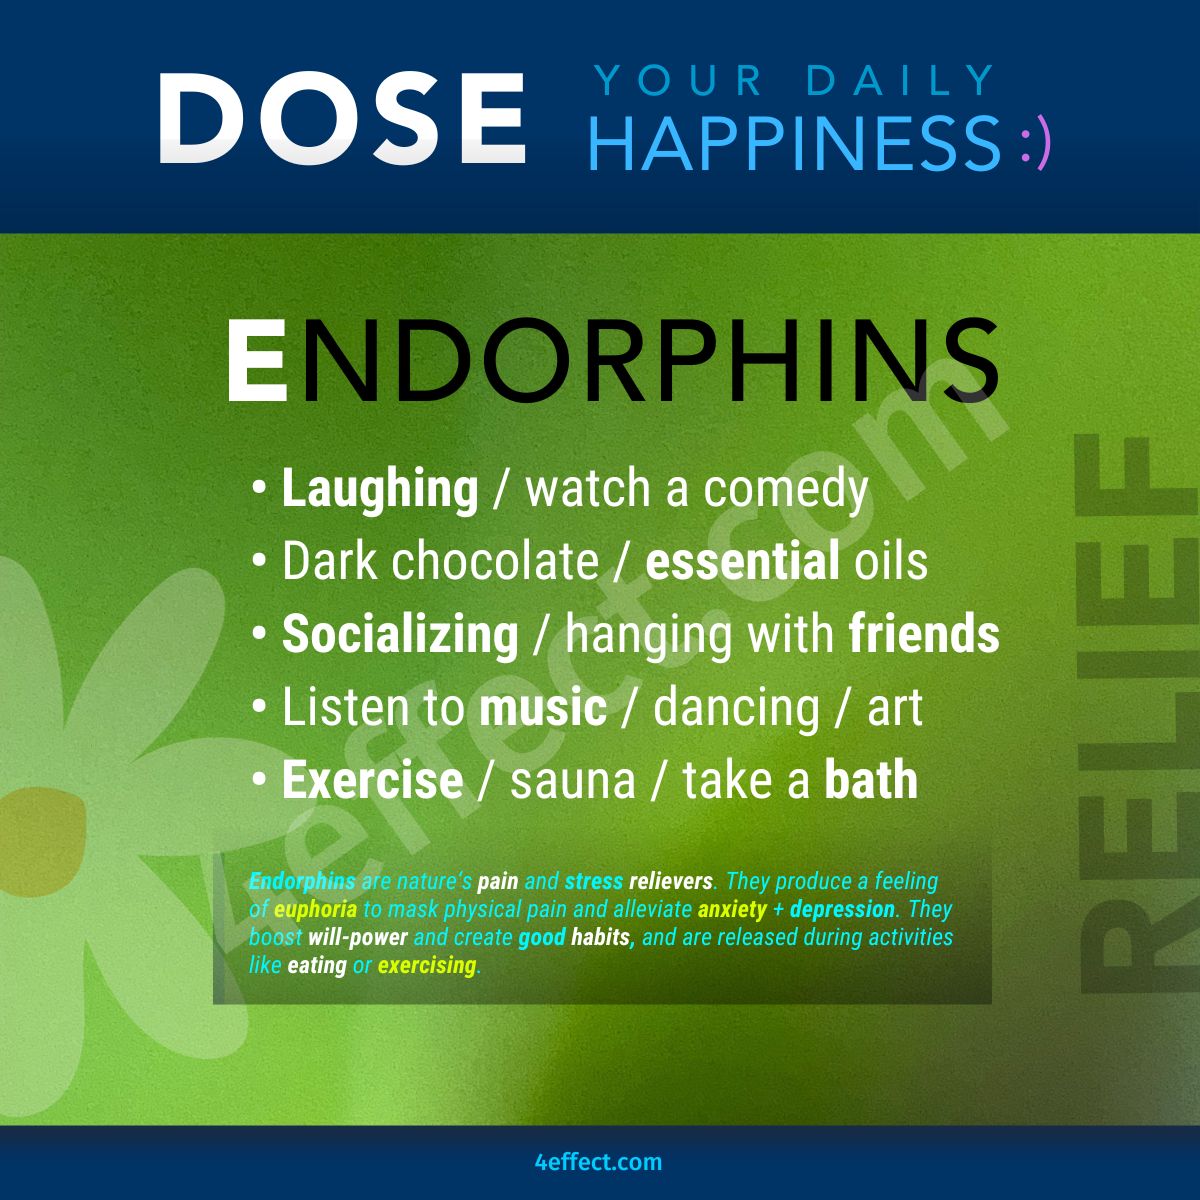 DOSE Endorphins